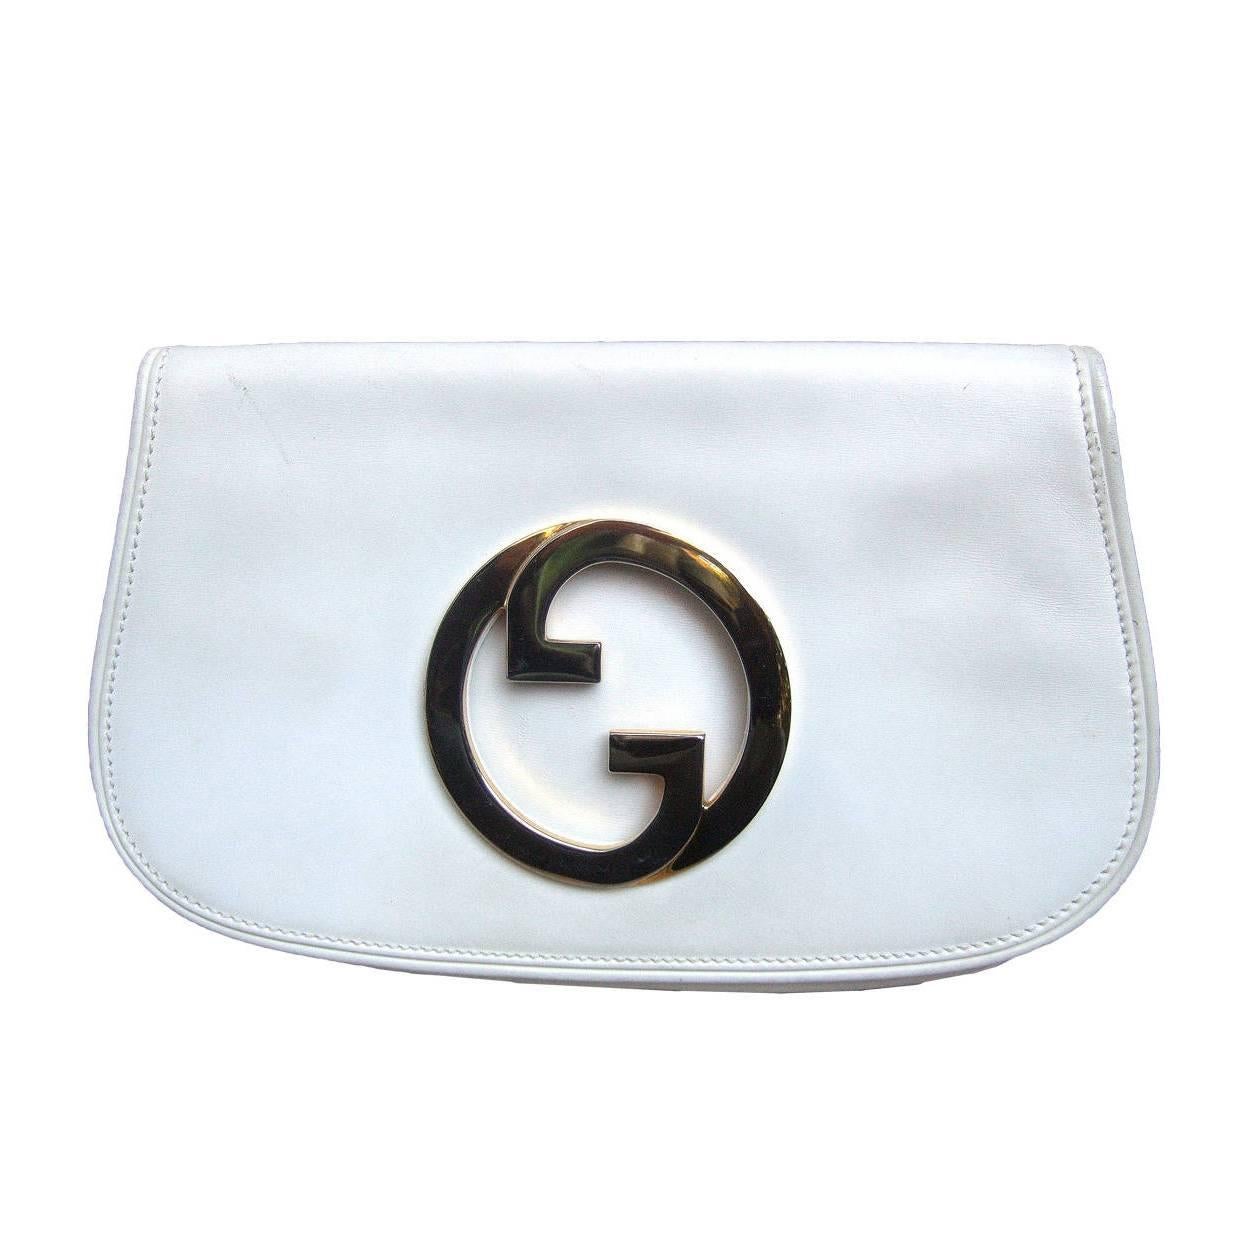 Gucci Sleek White Leather Blondie Clutch Bag c 1970s